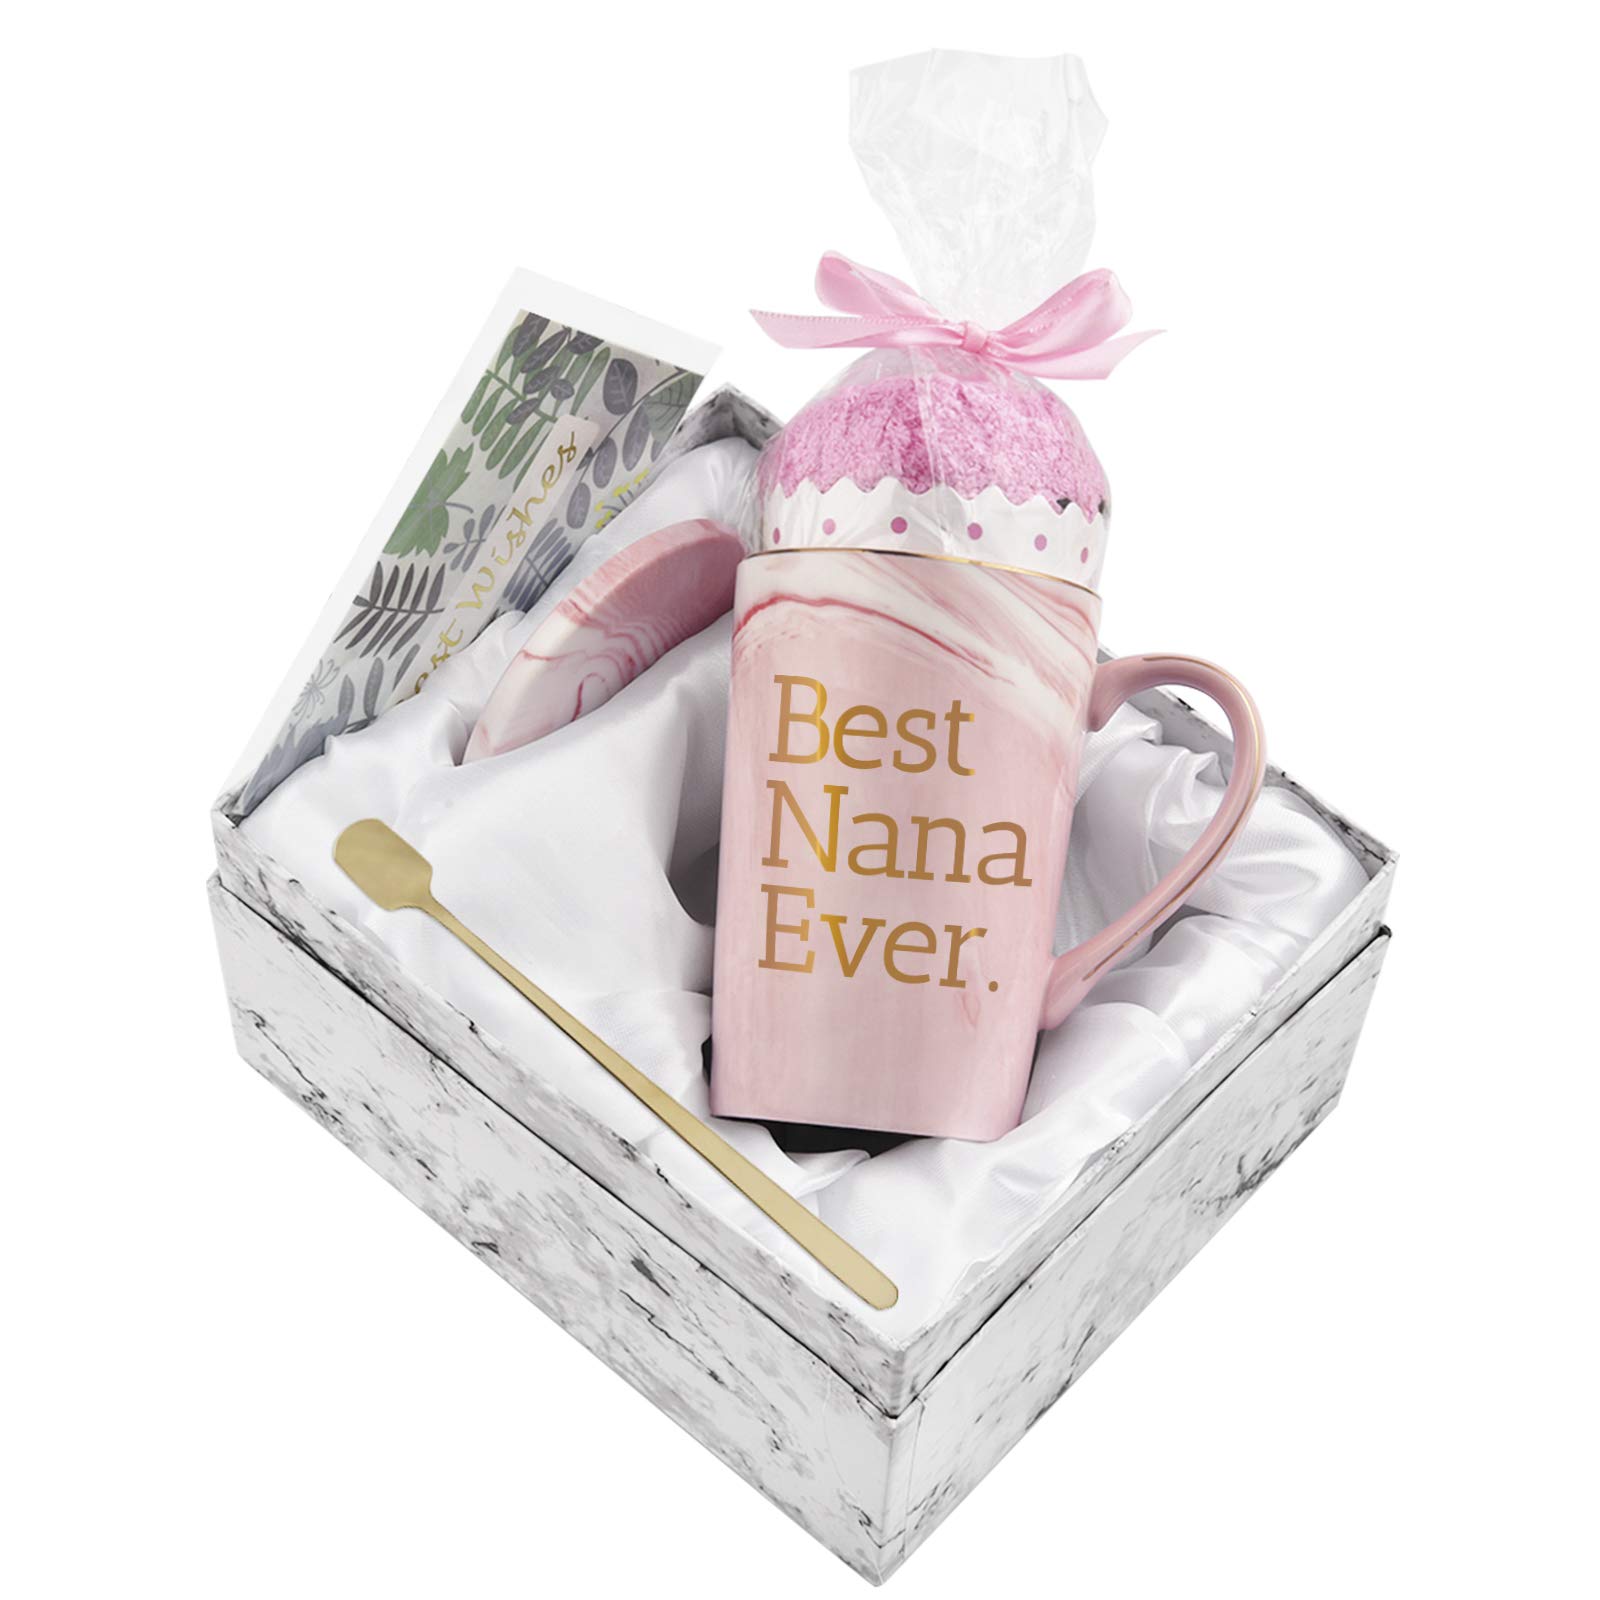 Best Nana Ever Funny Coffee Mug Nana Gifts for Women Grandma Mothers Day Gifts for Nana Women from Grandchildren Grandson Grandkids Grandma Marble Cup 14 Oz Pink with Gift Box, Socks